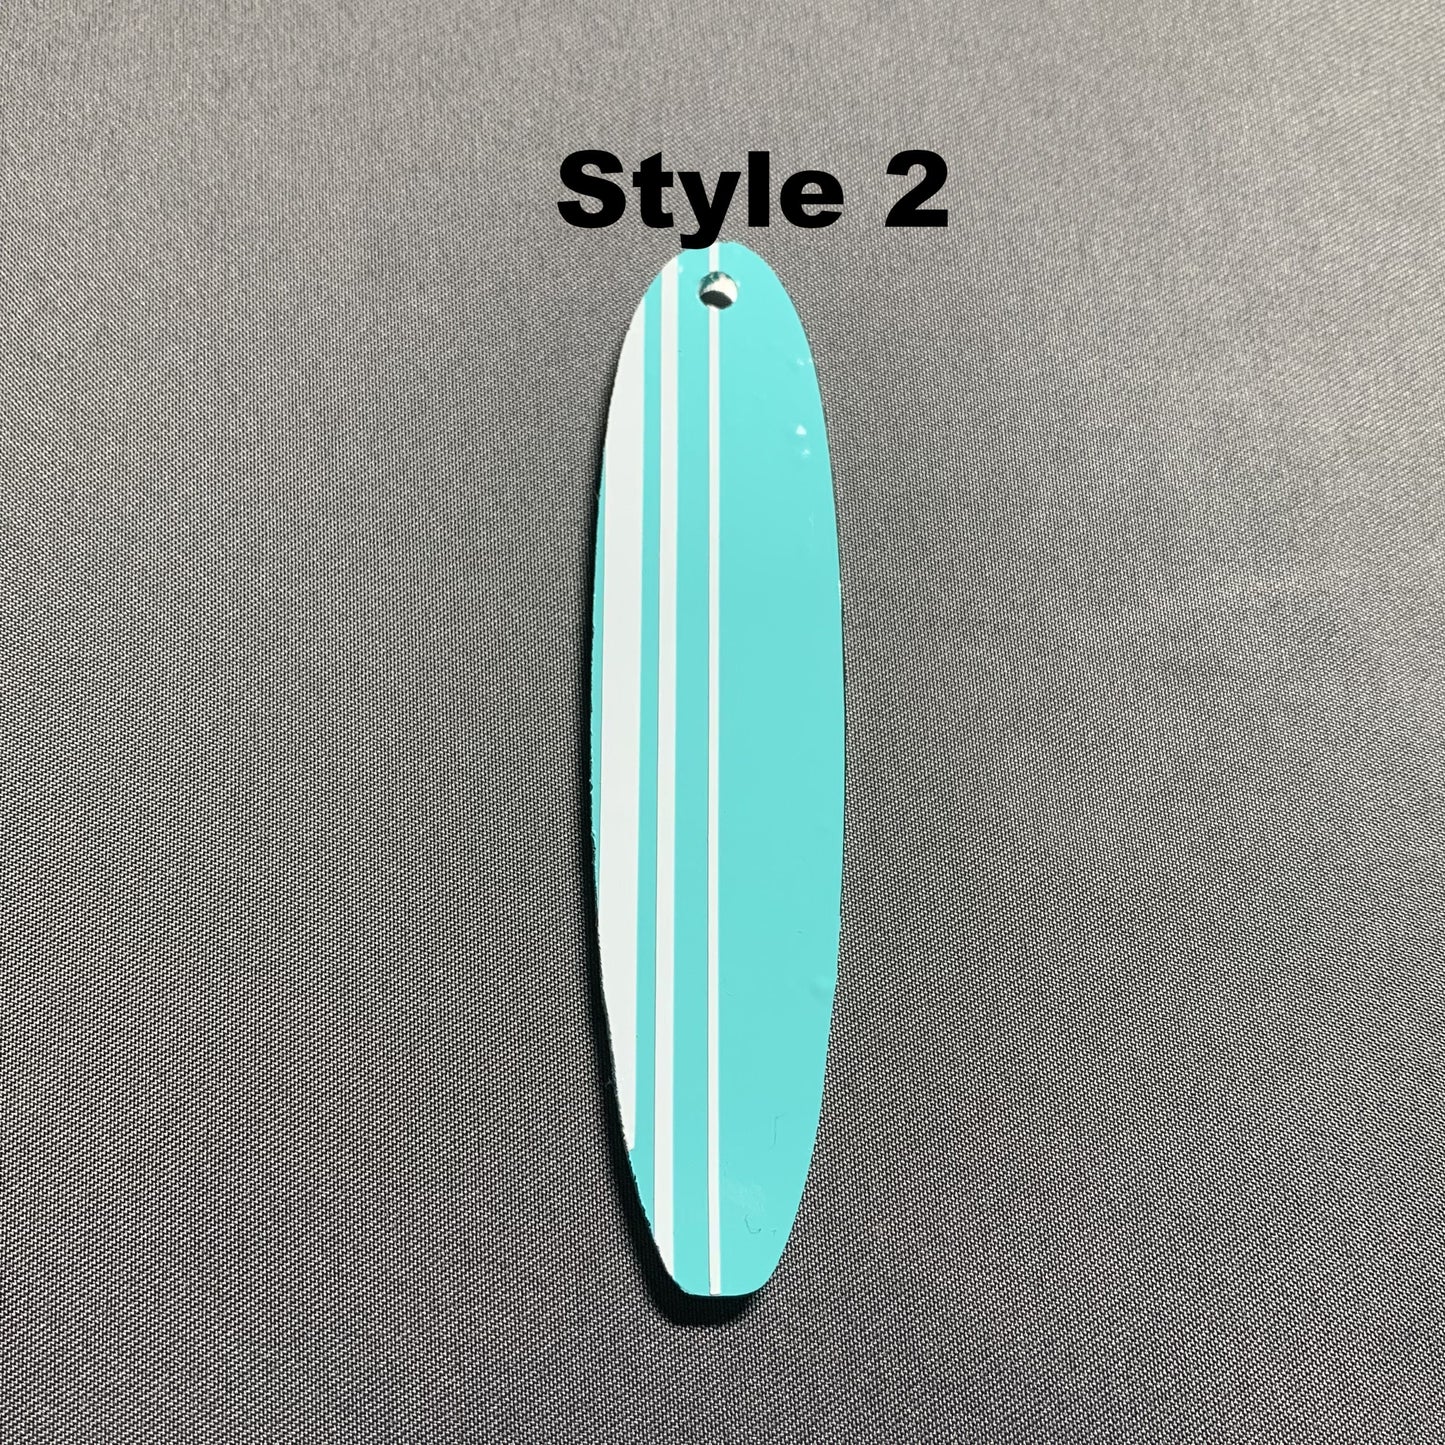 Surfboard (Style 2) Blank Acrylic Shape - 3 Inch